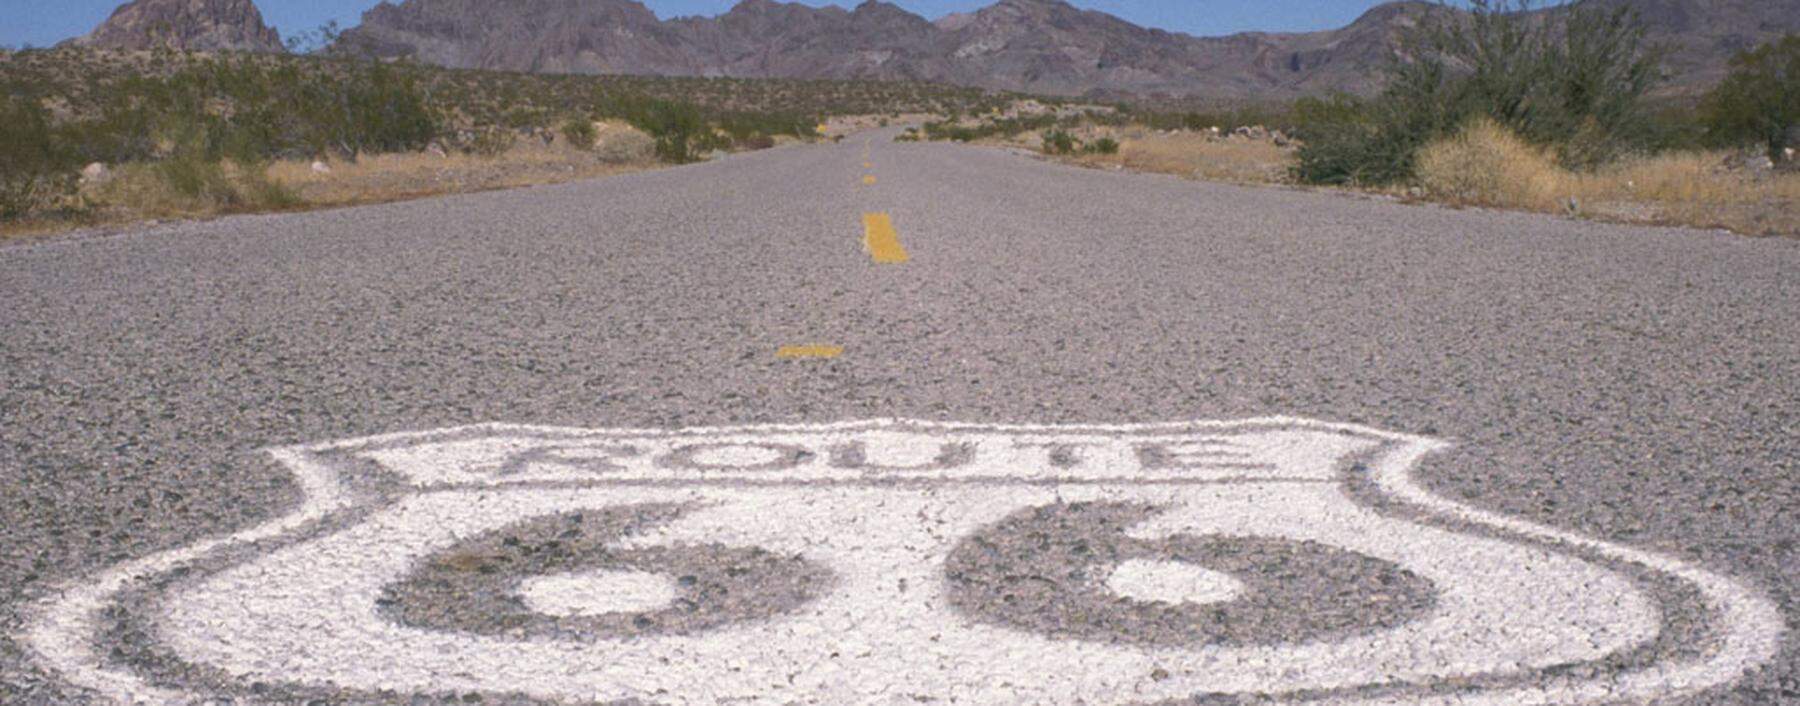 Die legendäre Route 66